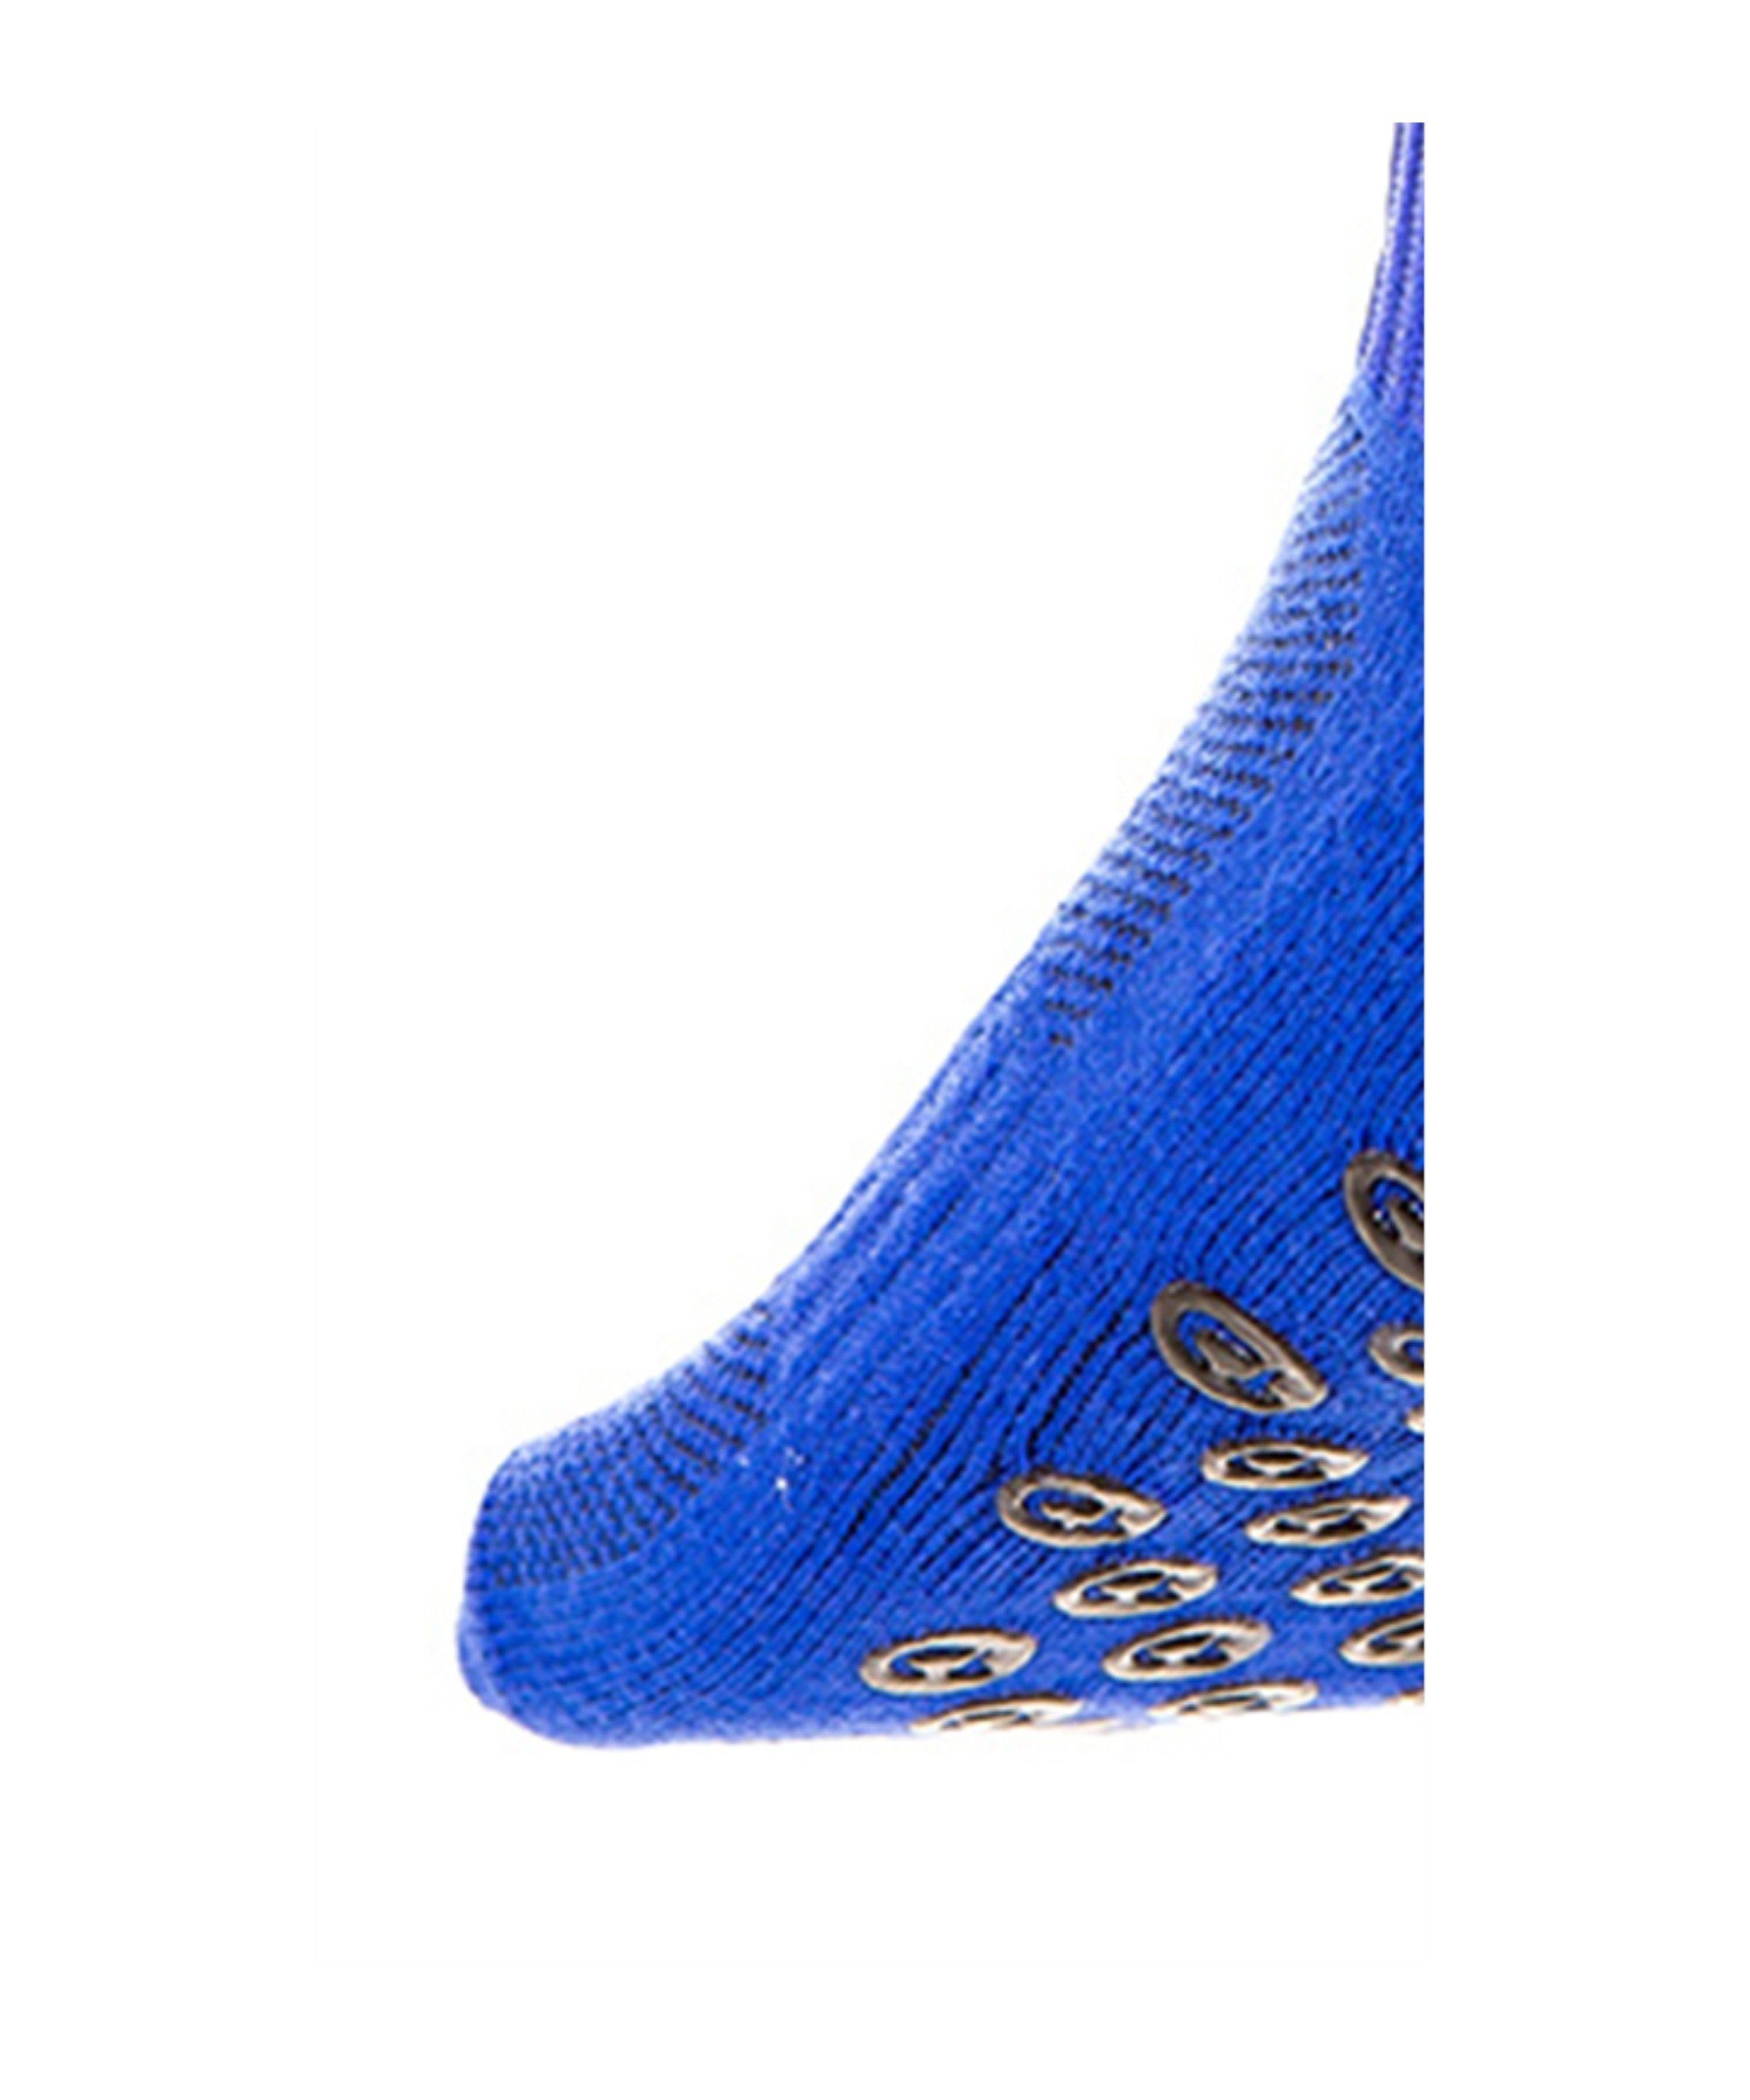 Gripsocks Sportsocken Tapedesign default blauweiss Socken